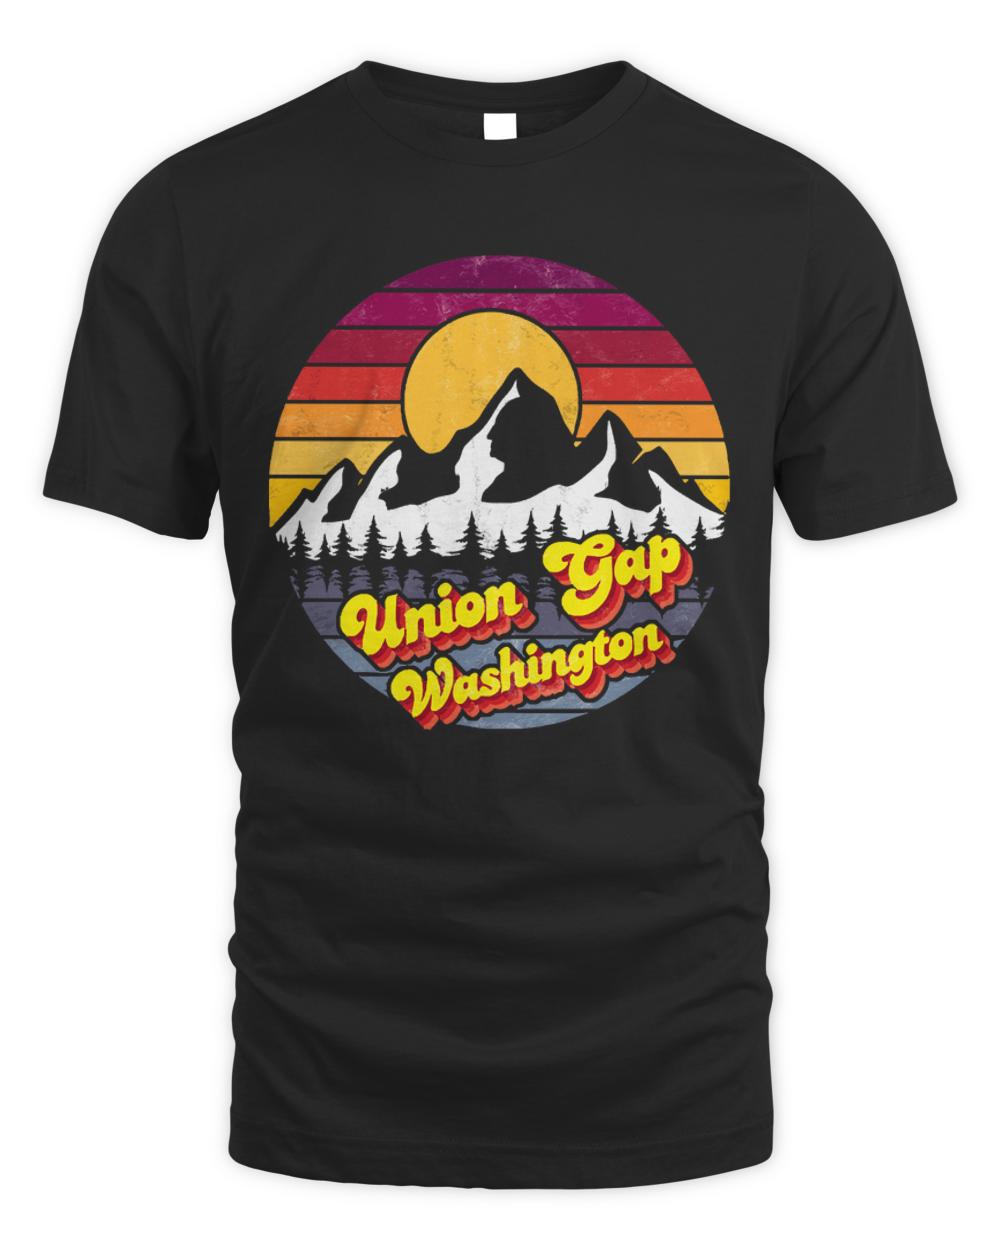 Union Gap T- Shirt Union Gap Washington T- Shirt